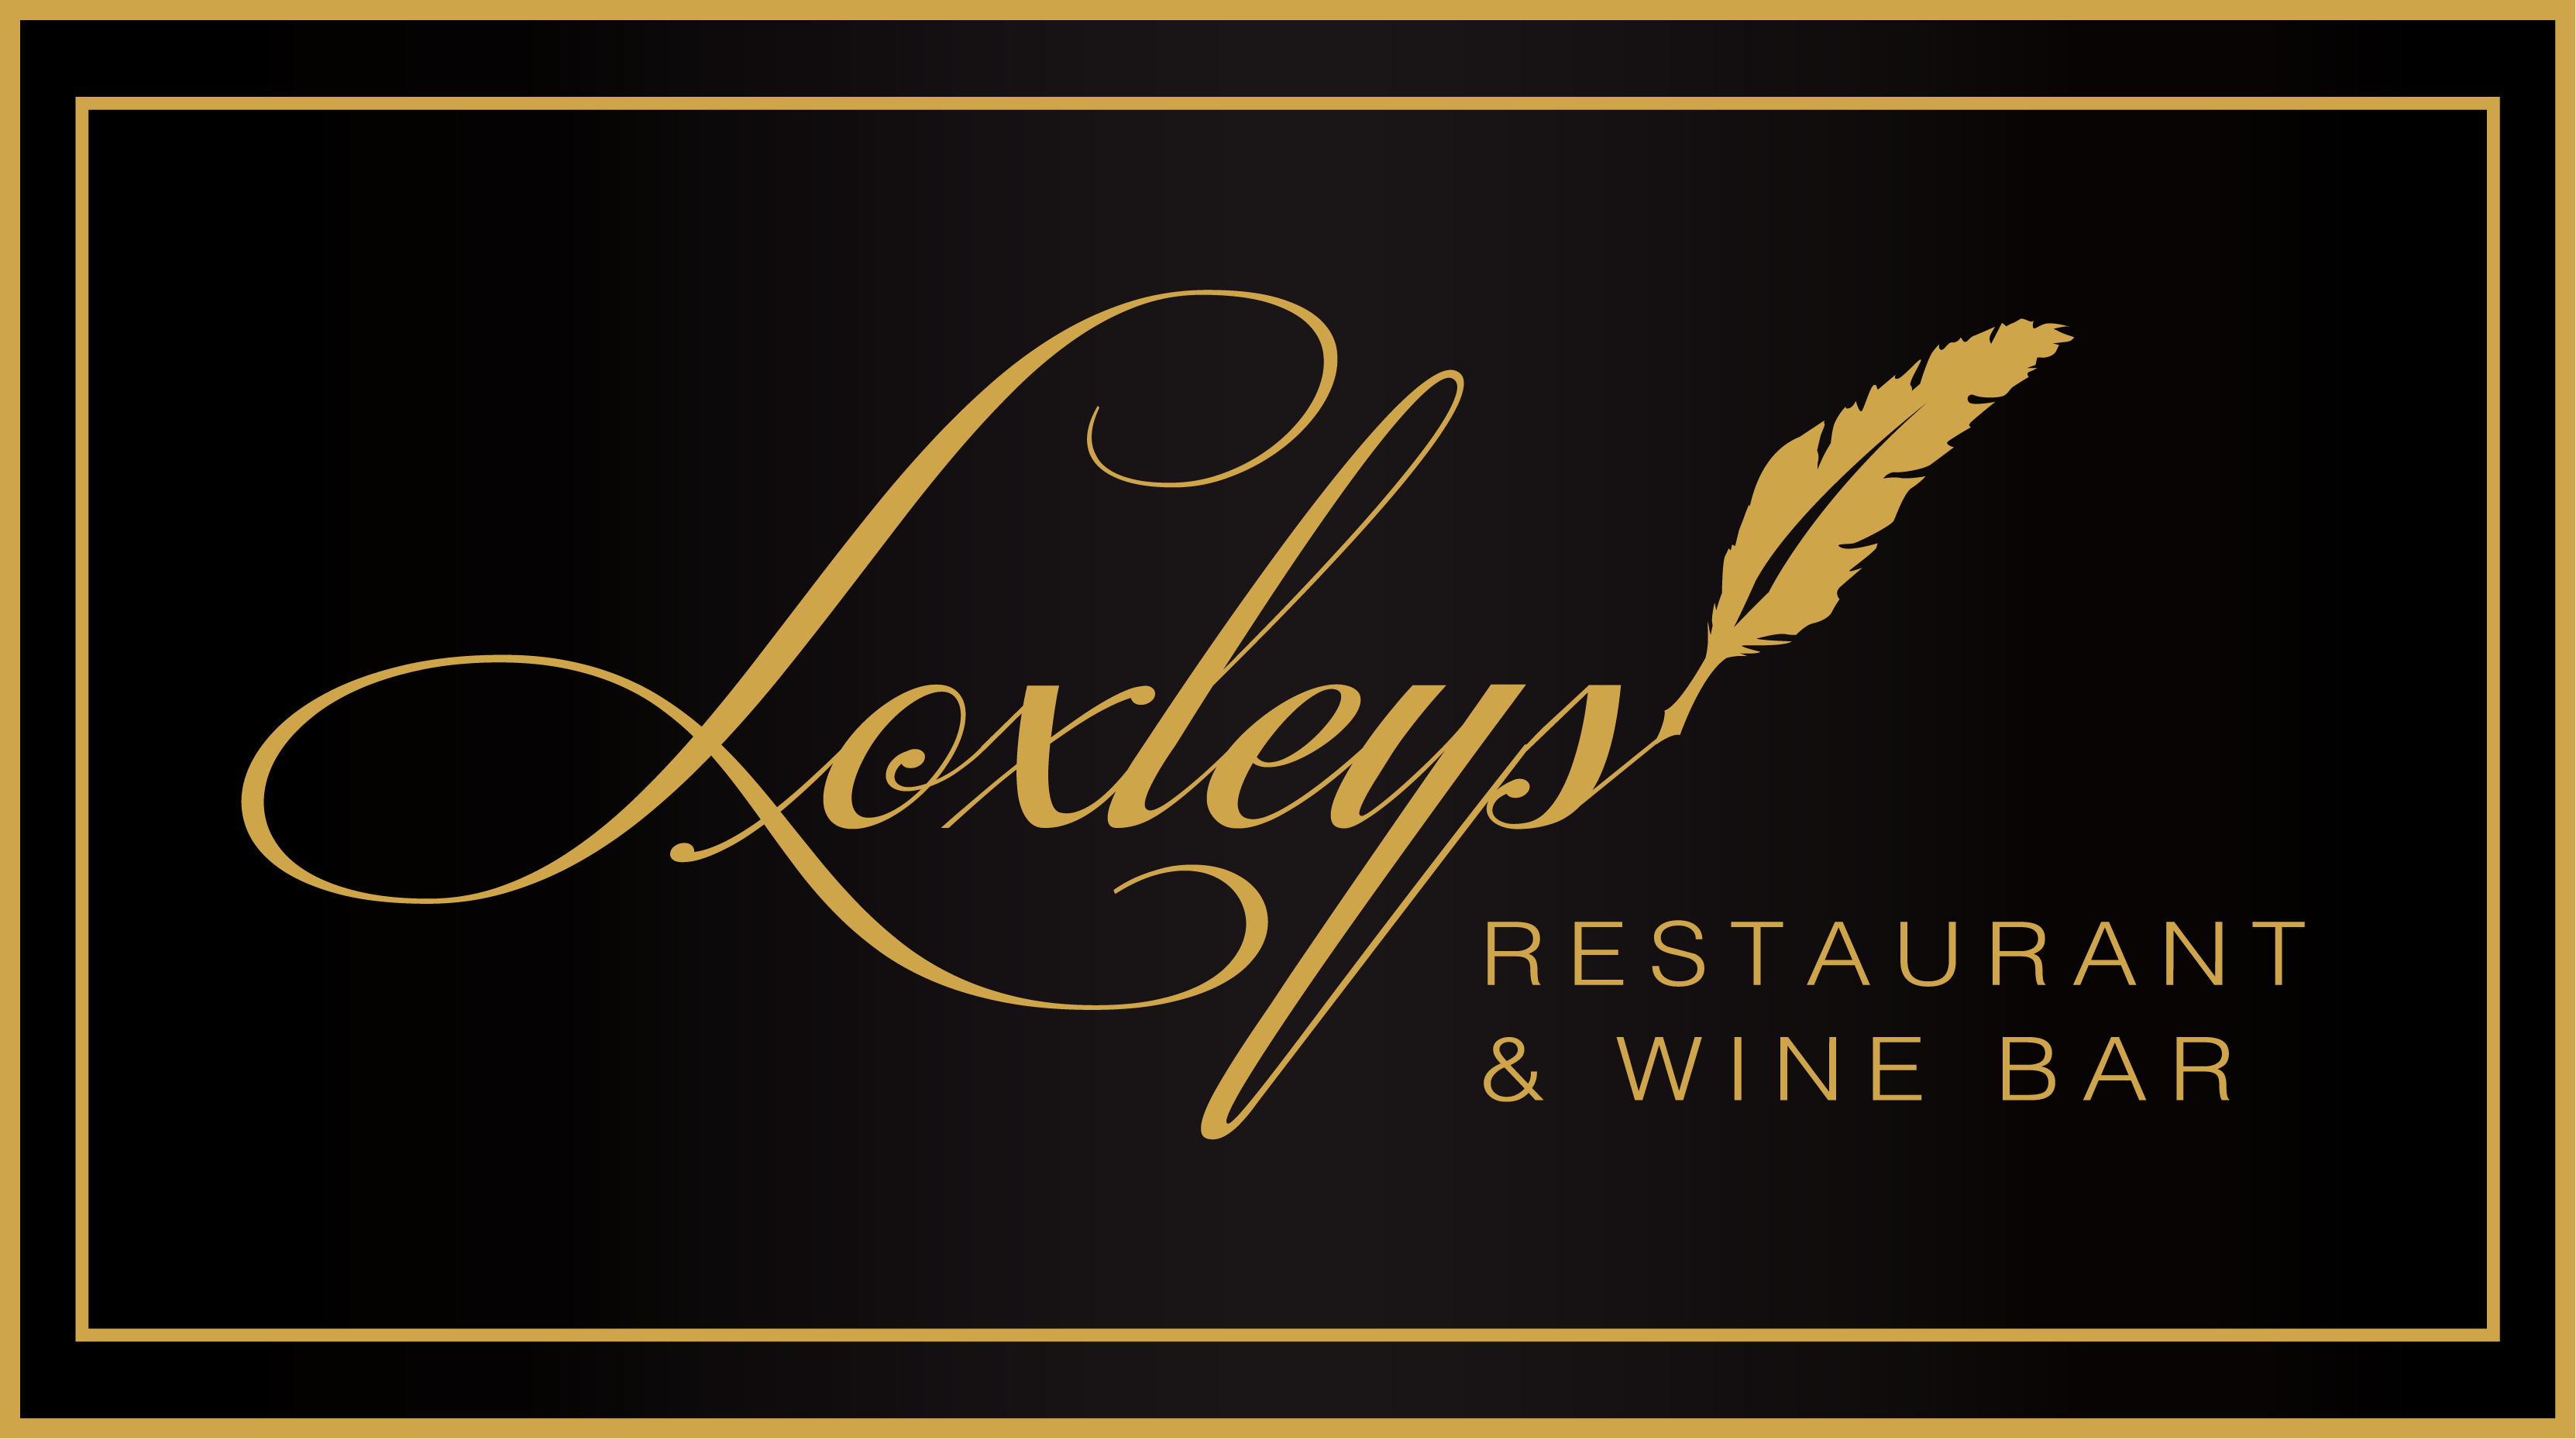 Loxleys logo